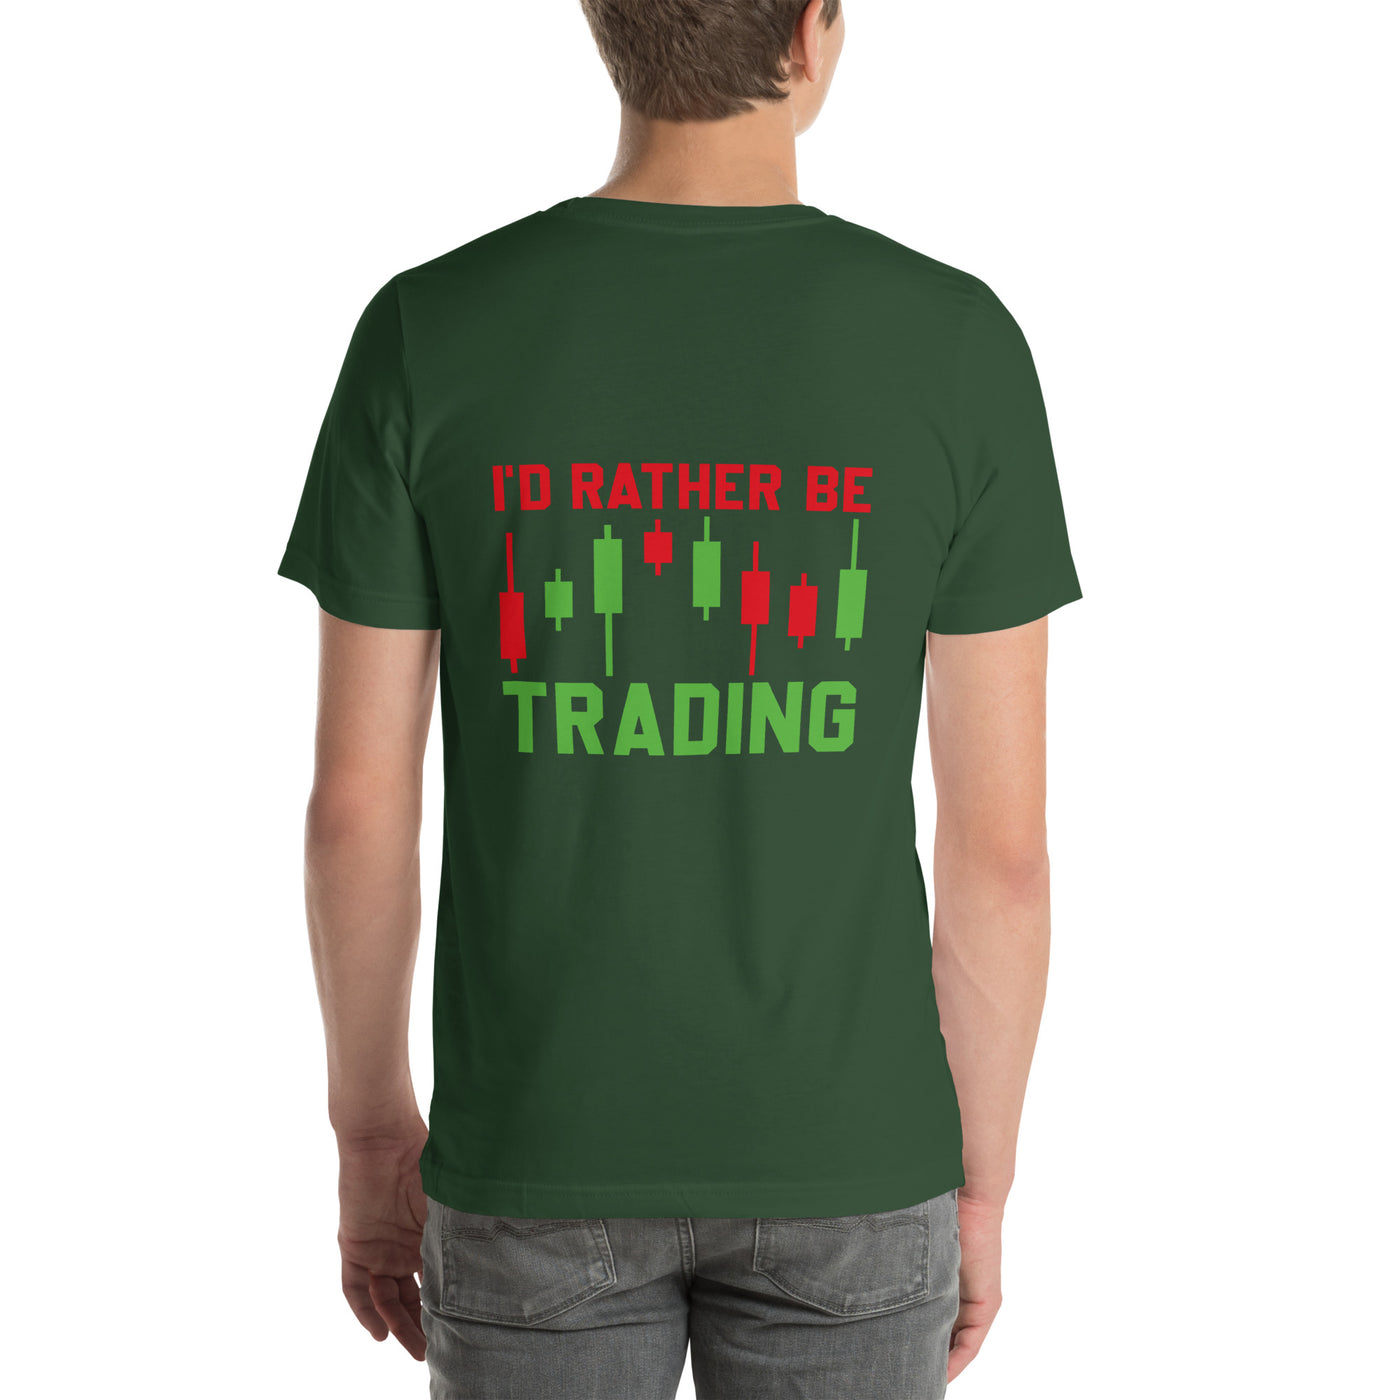 I'd rater be Trading ( Tanvir ) - Unisex t-shirt ( Back Print )